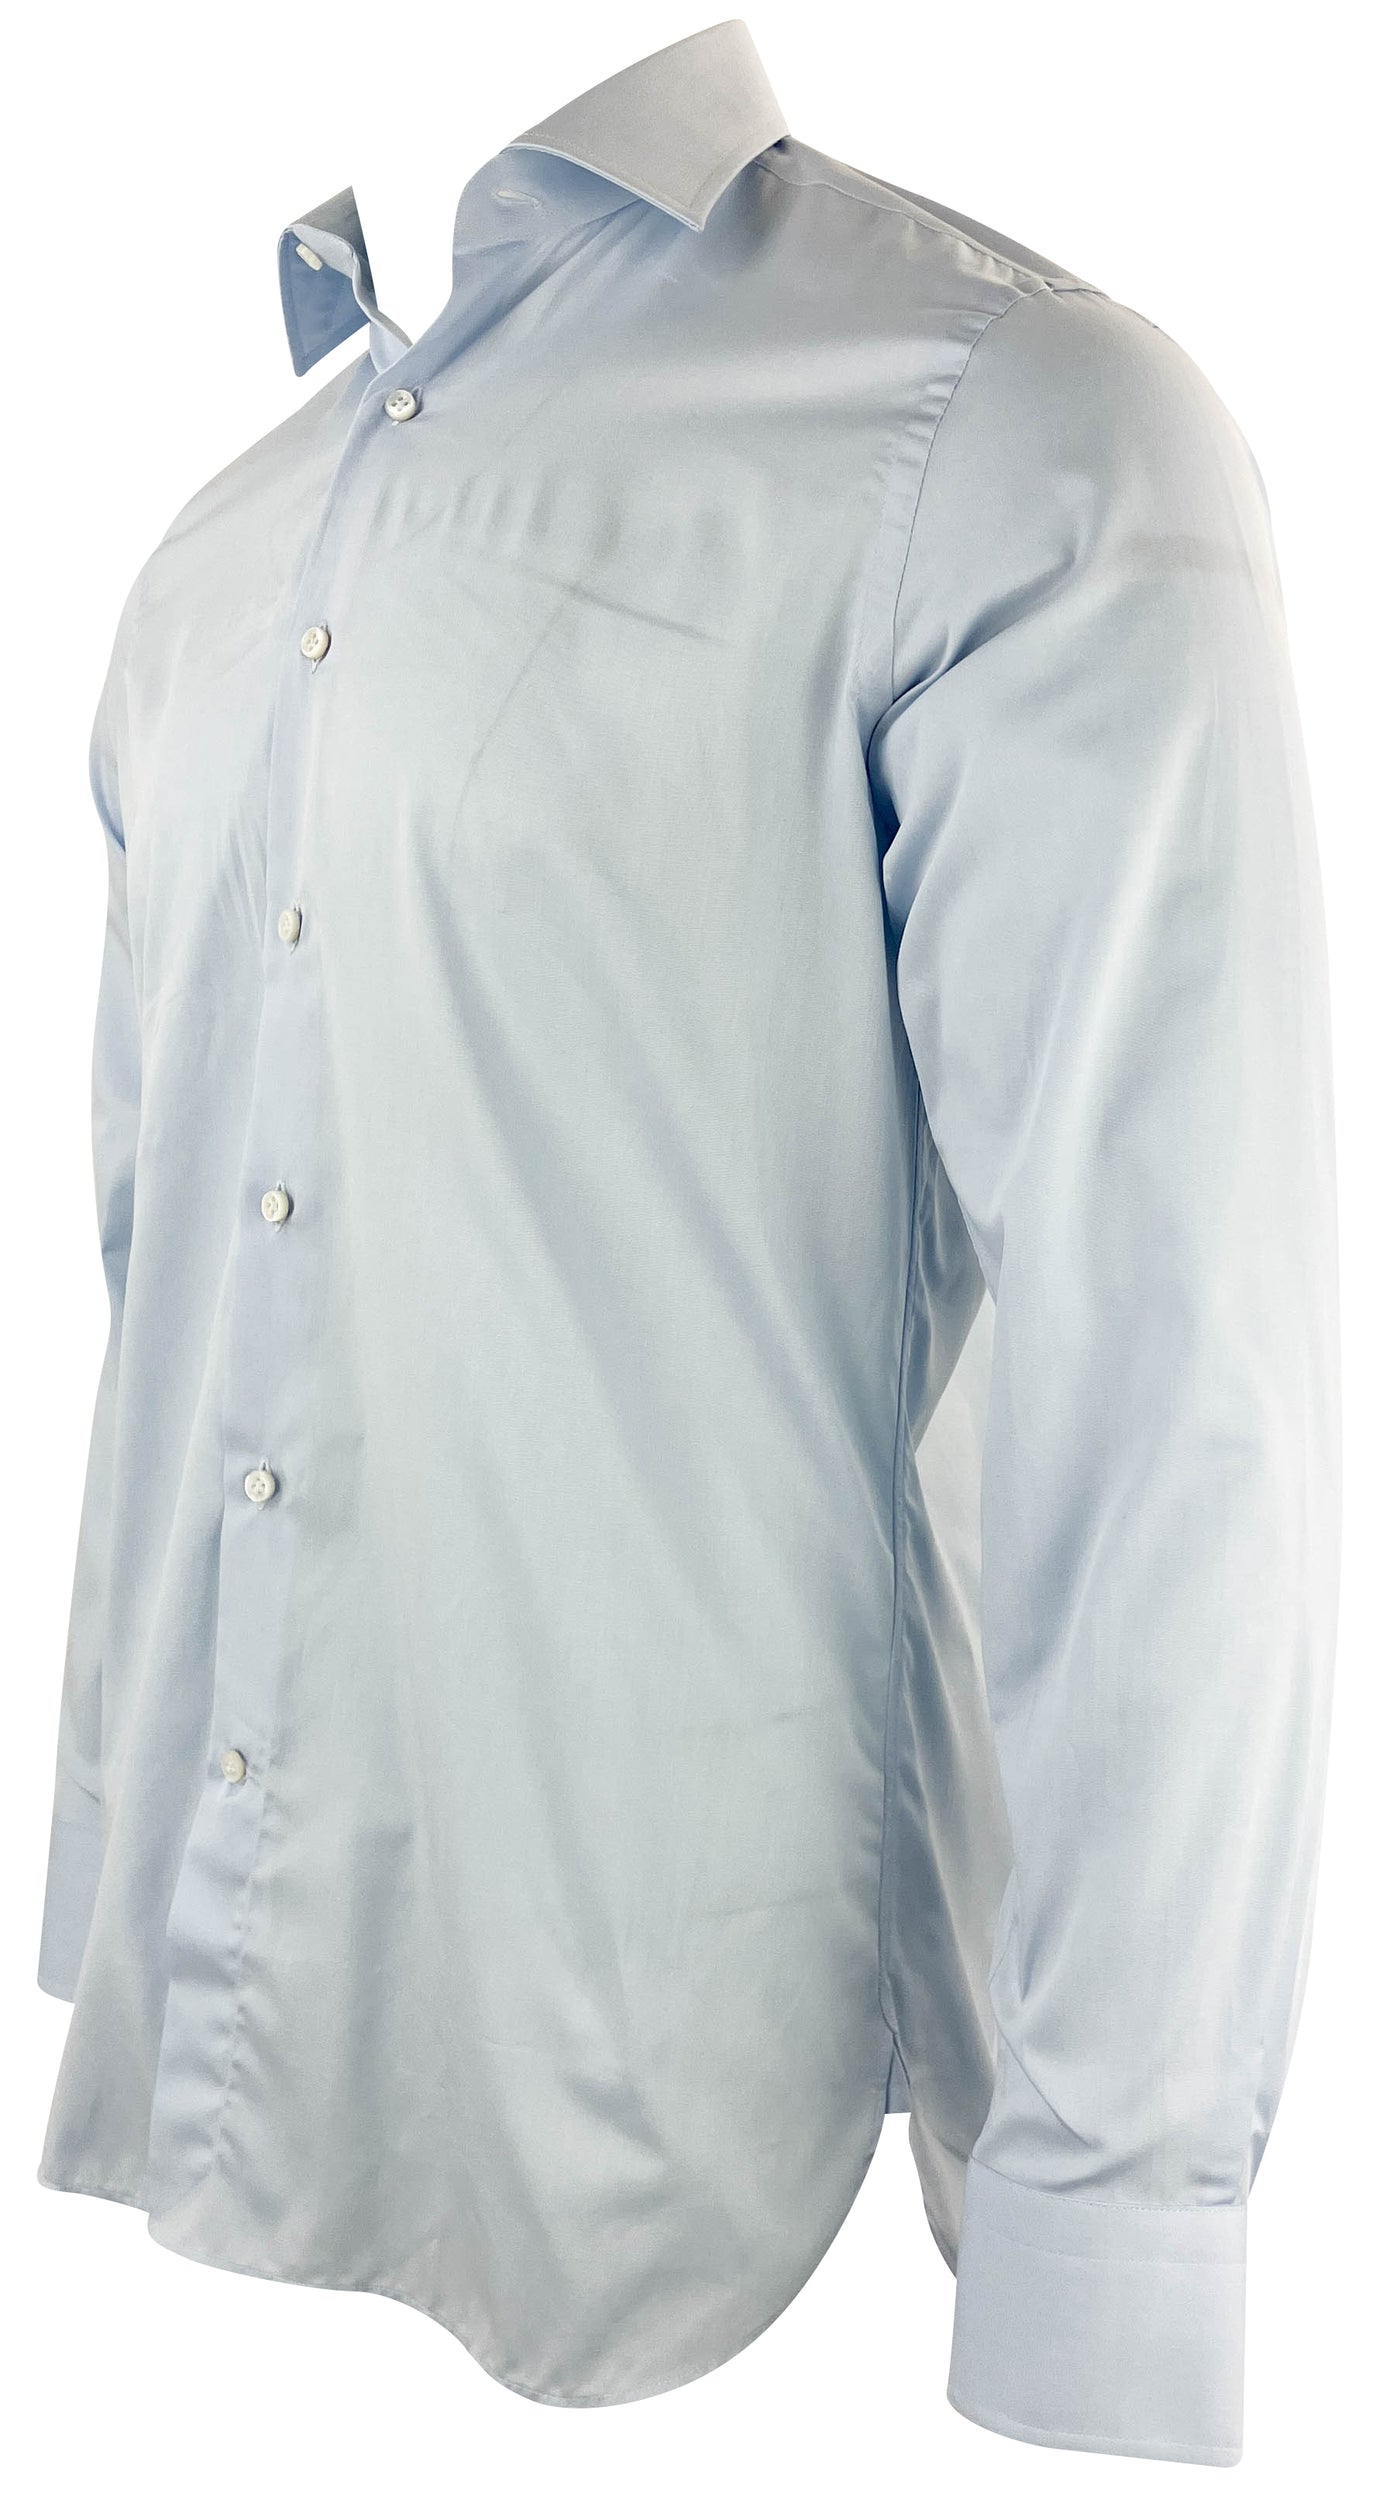 Sonrisa Cotton Poplin Button Down Shirt in Light Blue - Discounts on Sonrisa at UAL